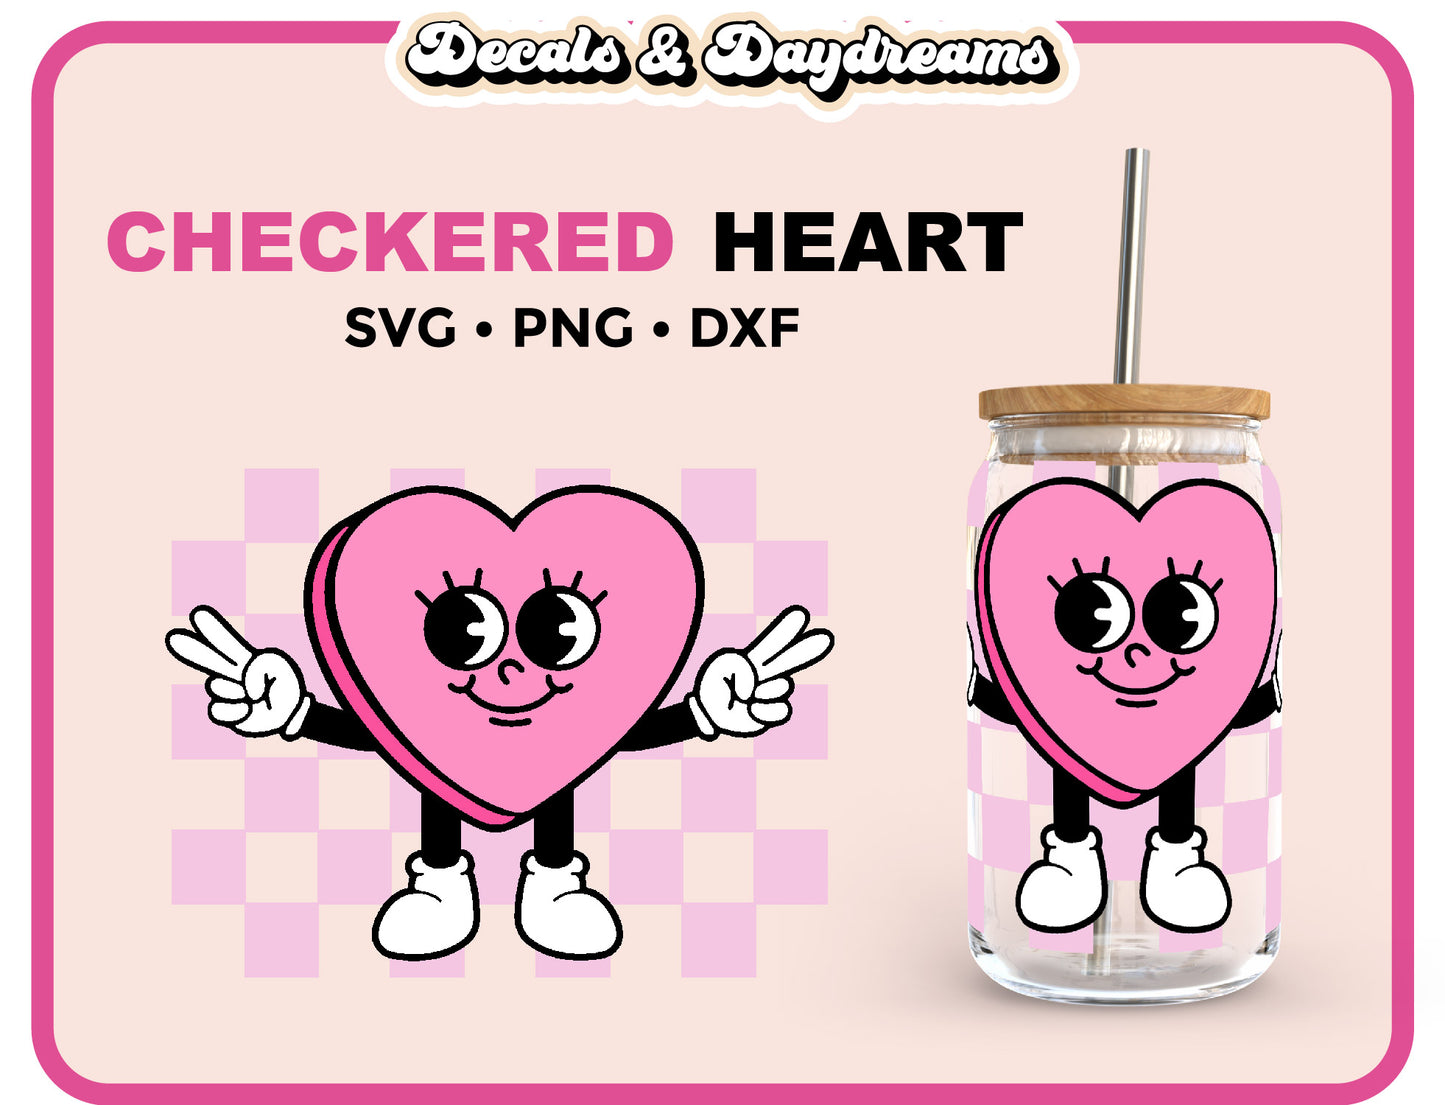 Retro Checkered Heart Decal